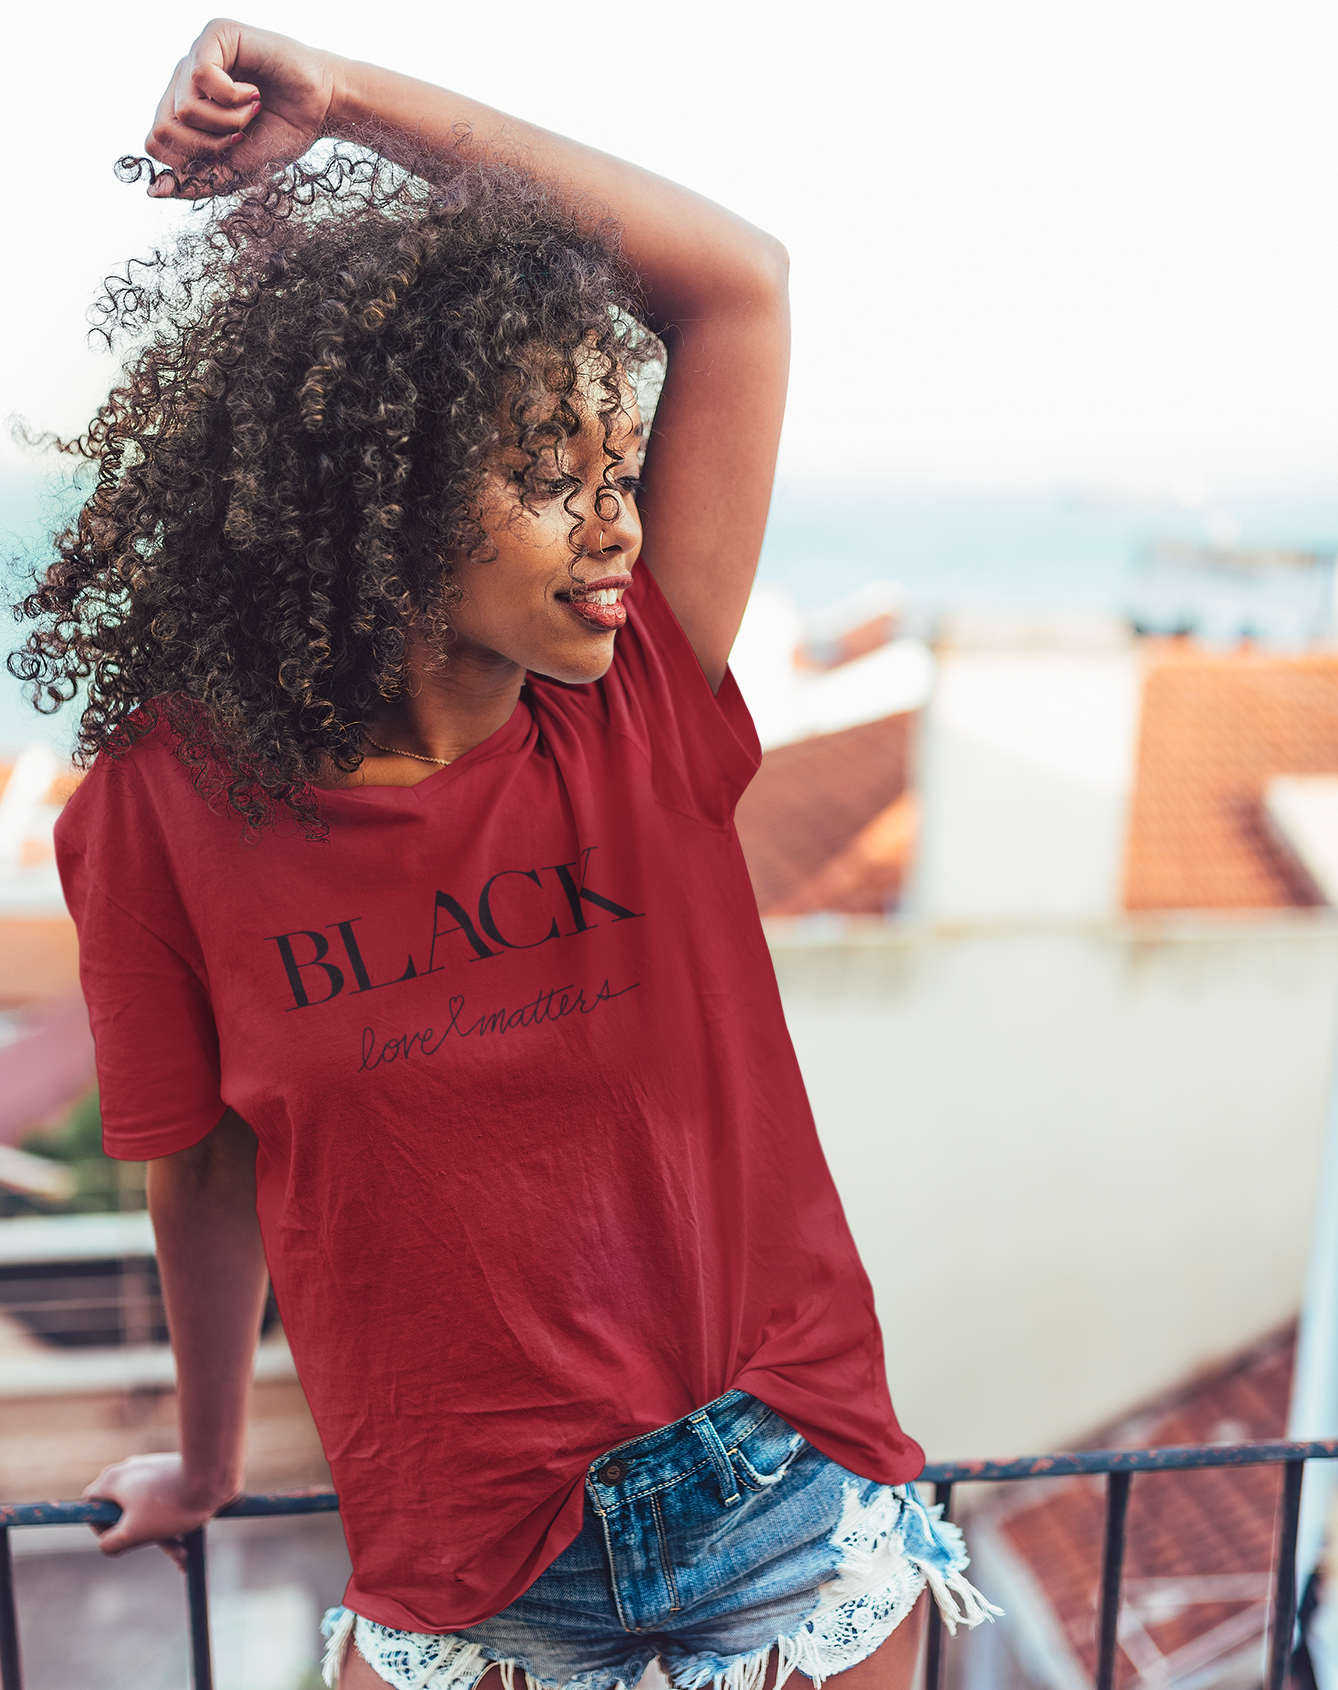 Black Love Matters Crewneck T-shirt